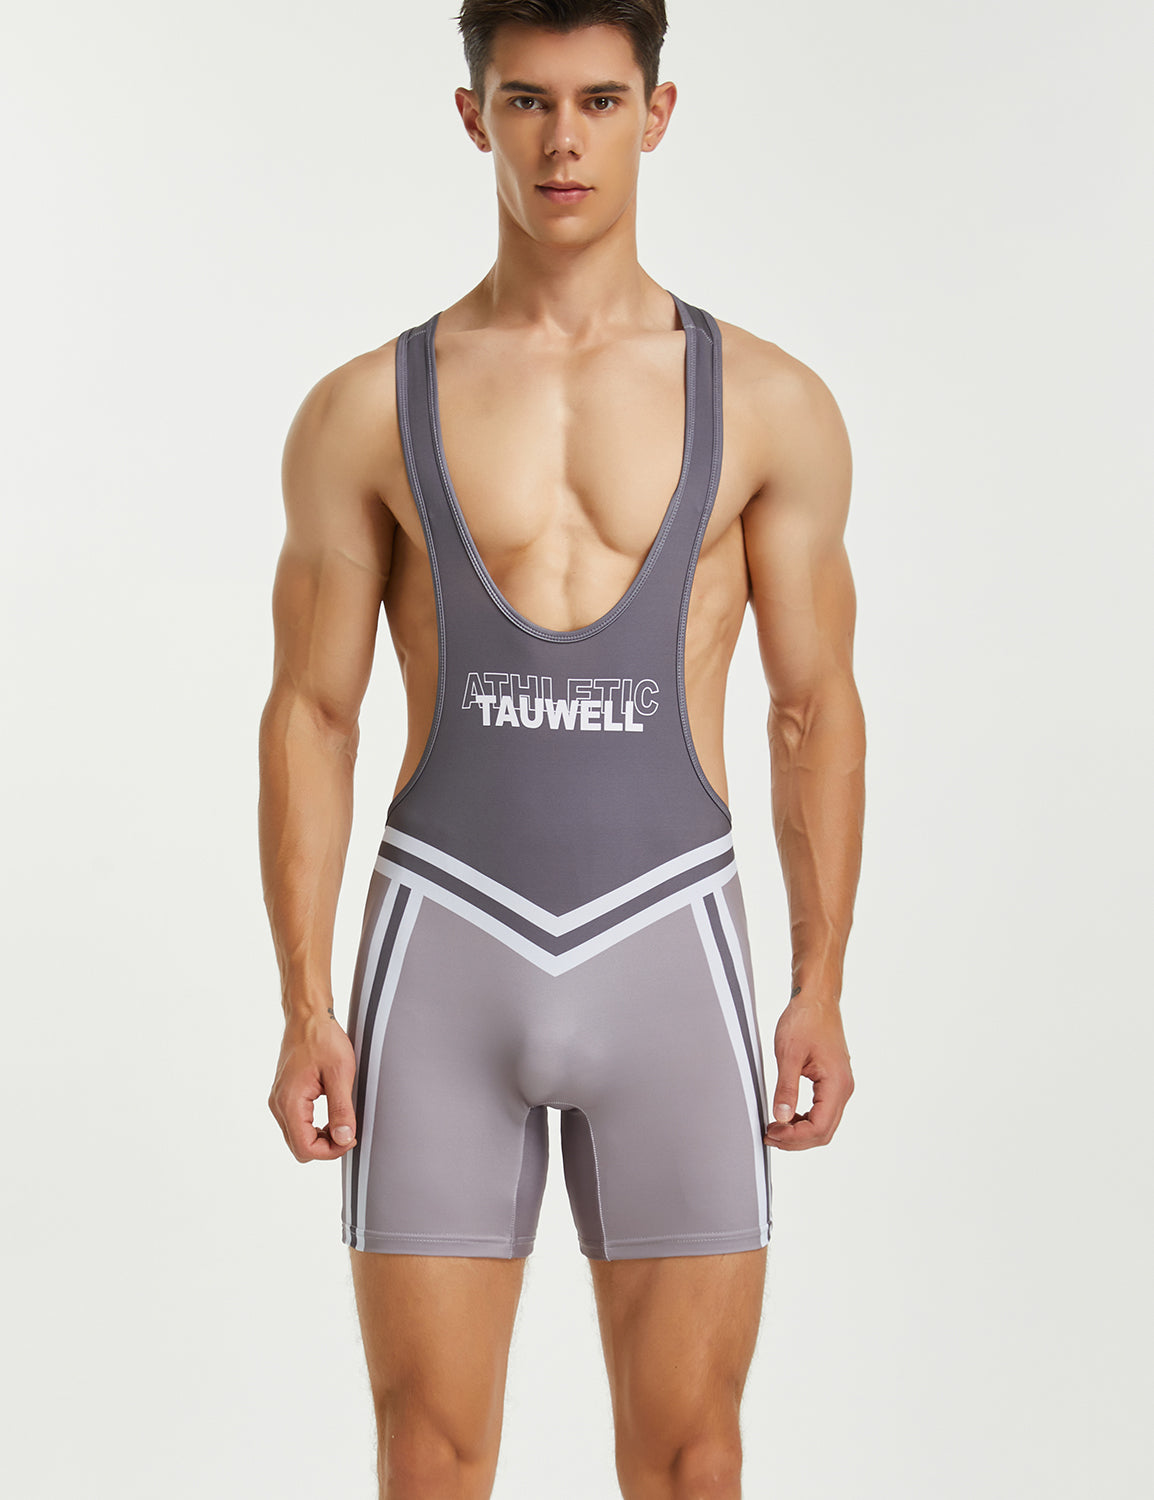 TAUWELL Mens Sexy Fitness Wrestling Leotard Singlet Bodysuit 9701